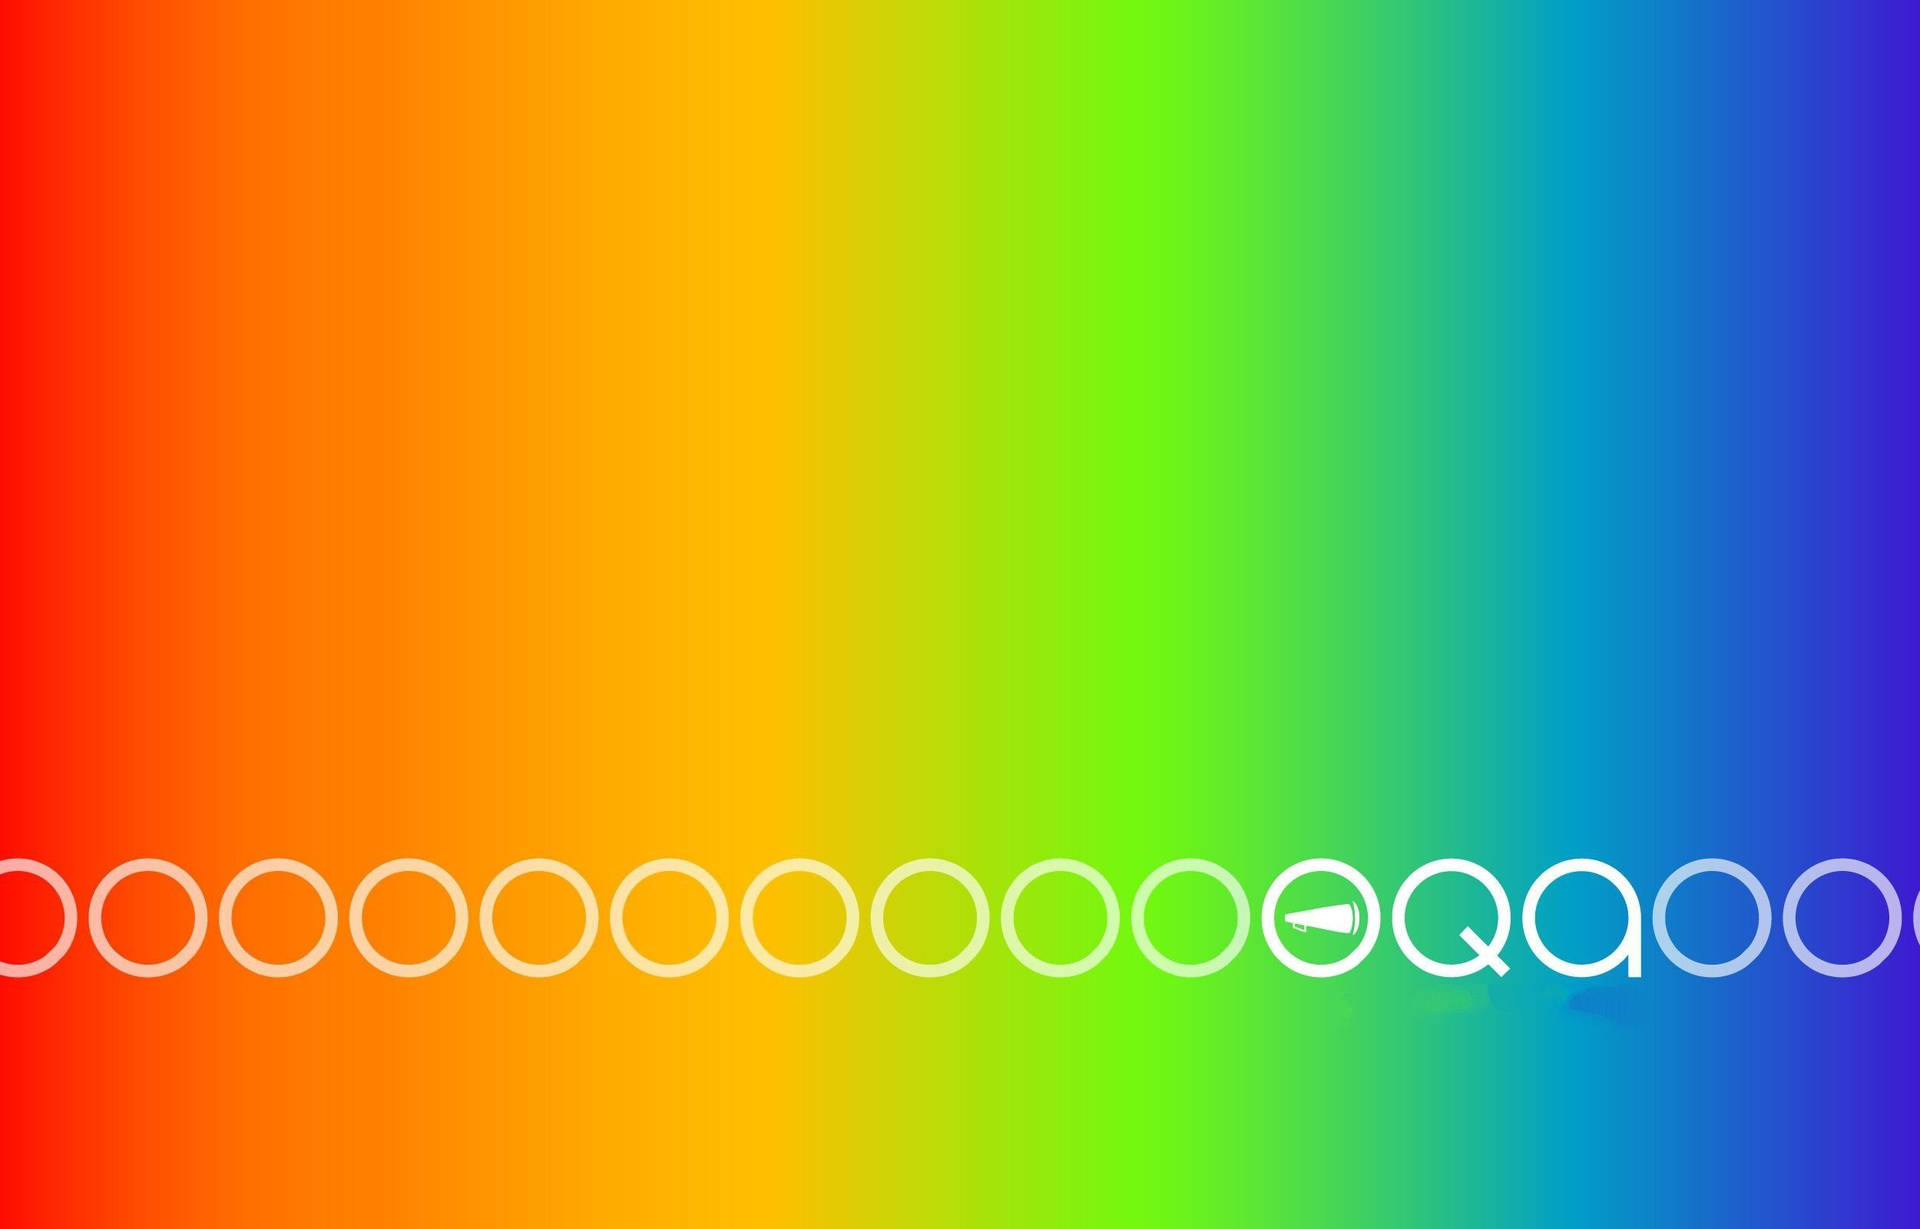 Vibrant Blended Rainbow Lgbtqa+ Pride Background